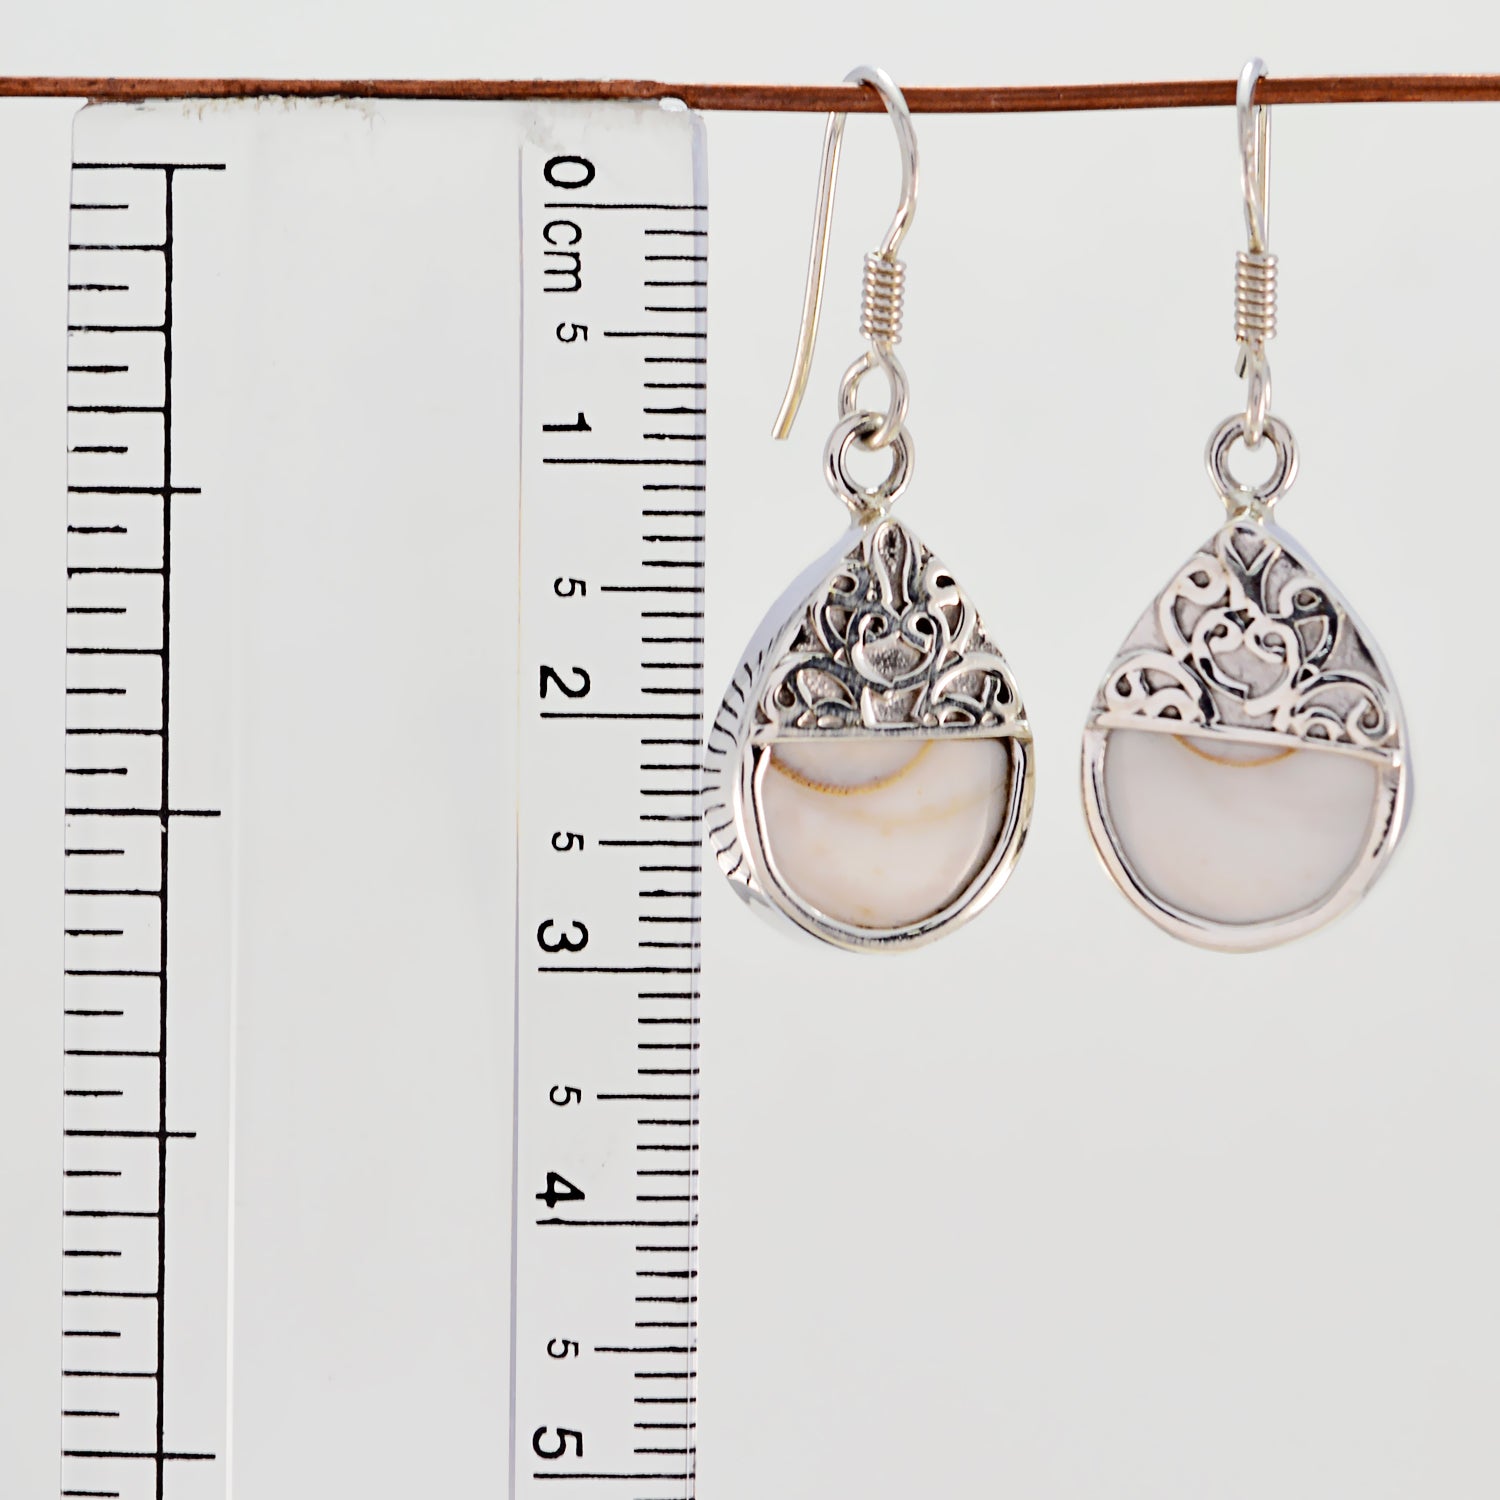 Riyo Genuine Gems pear Cabochon White Pearl Silver Earrings christmas gift